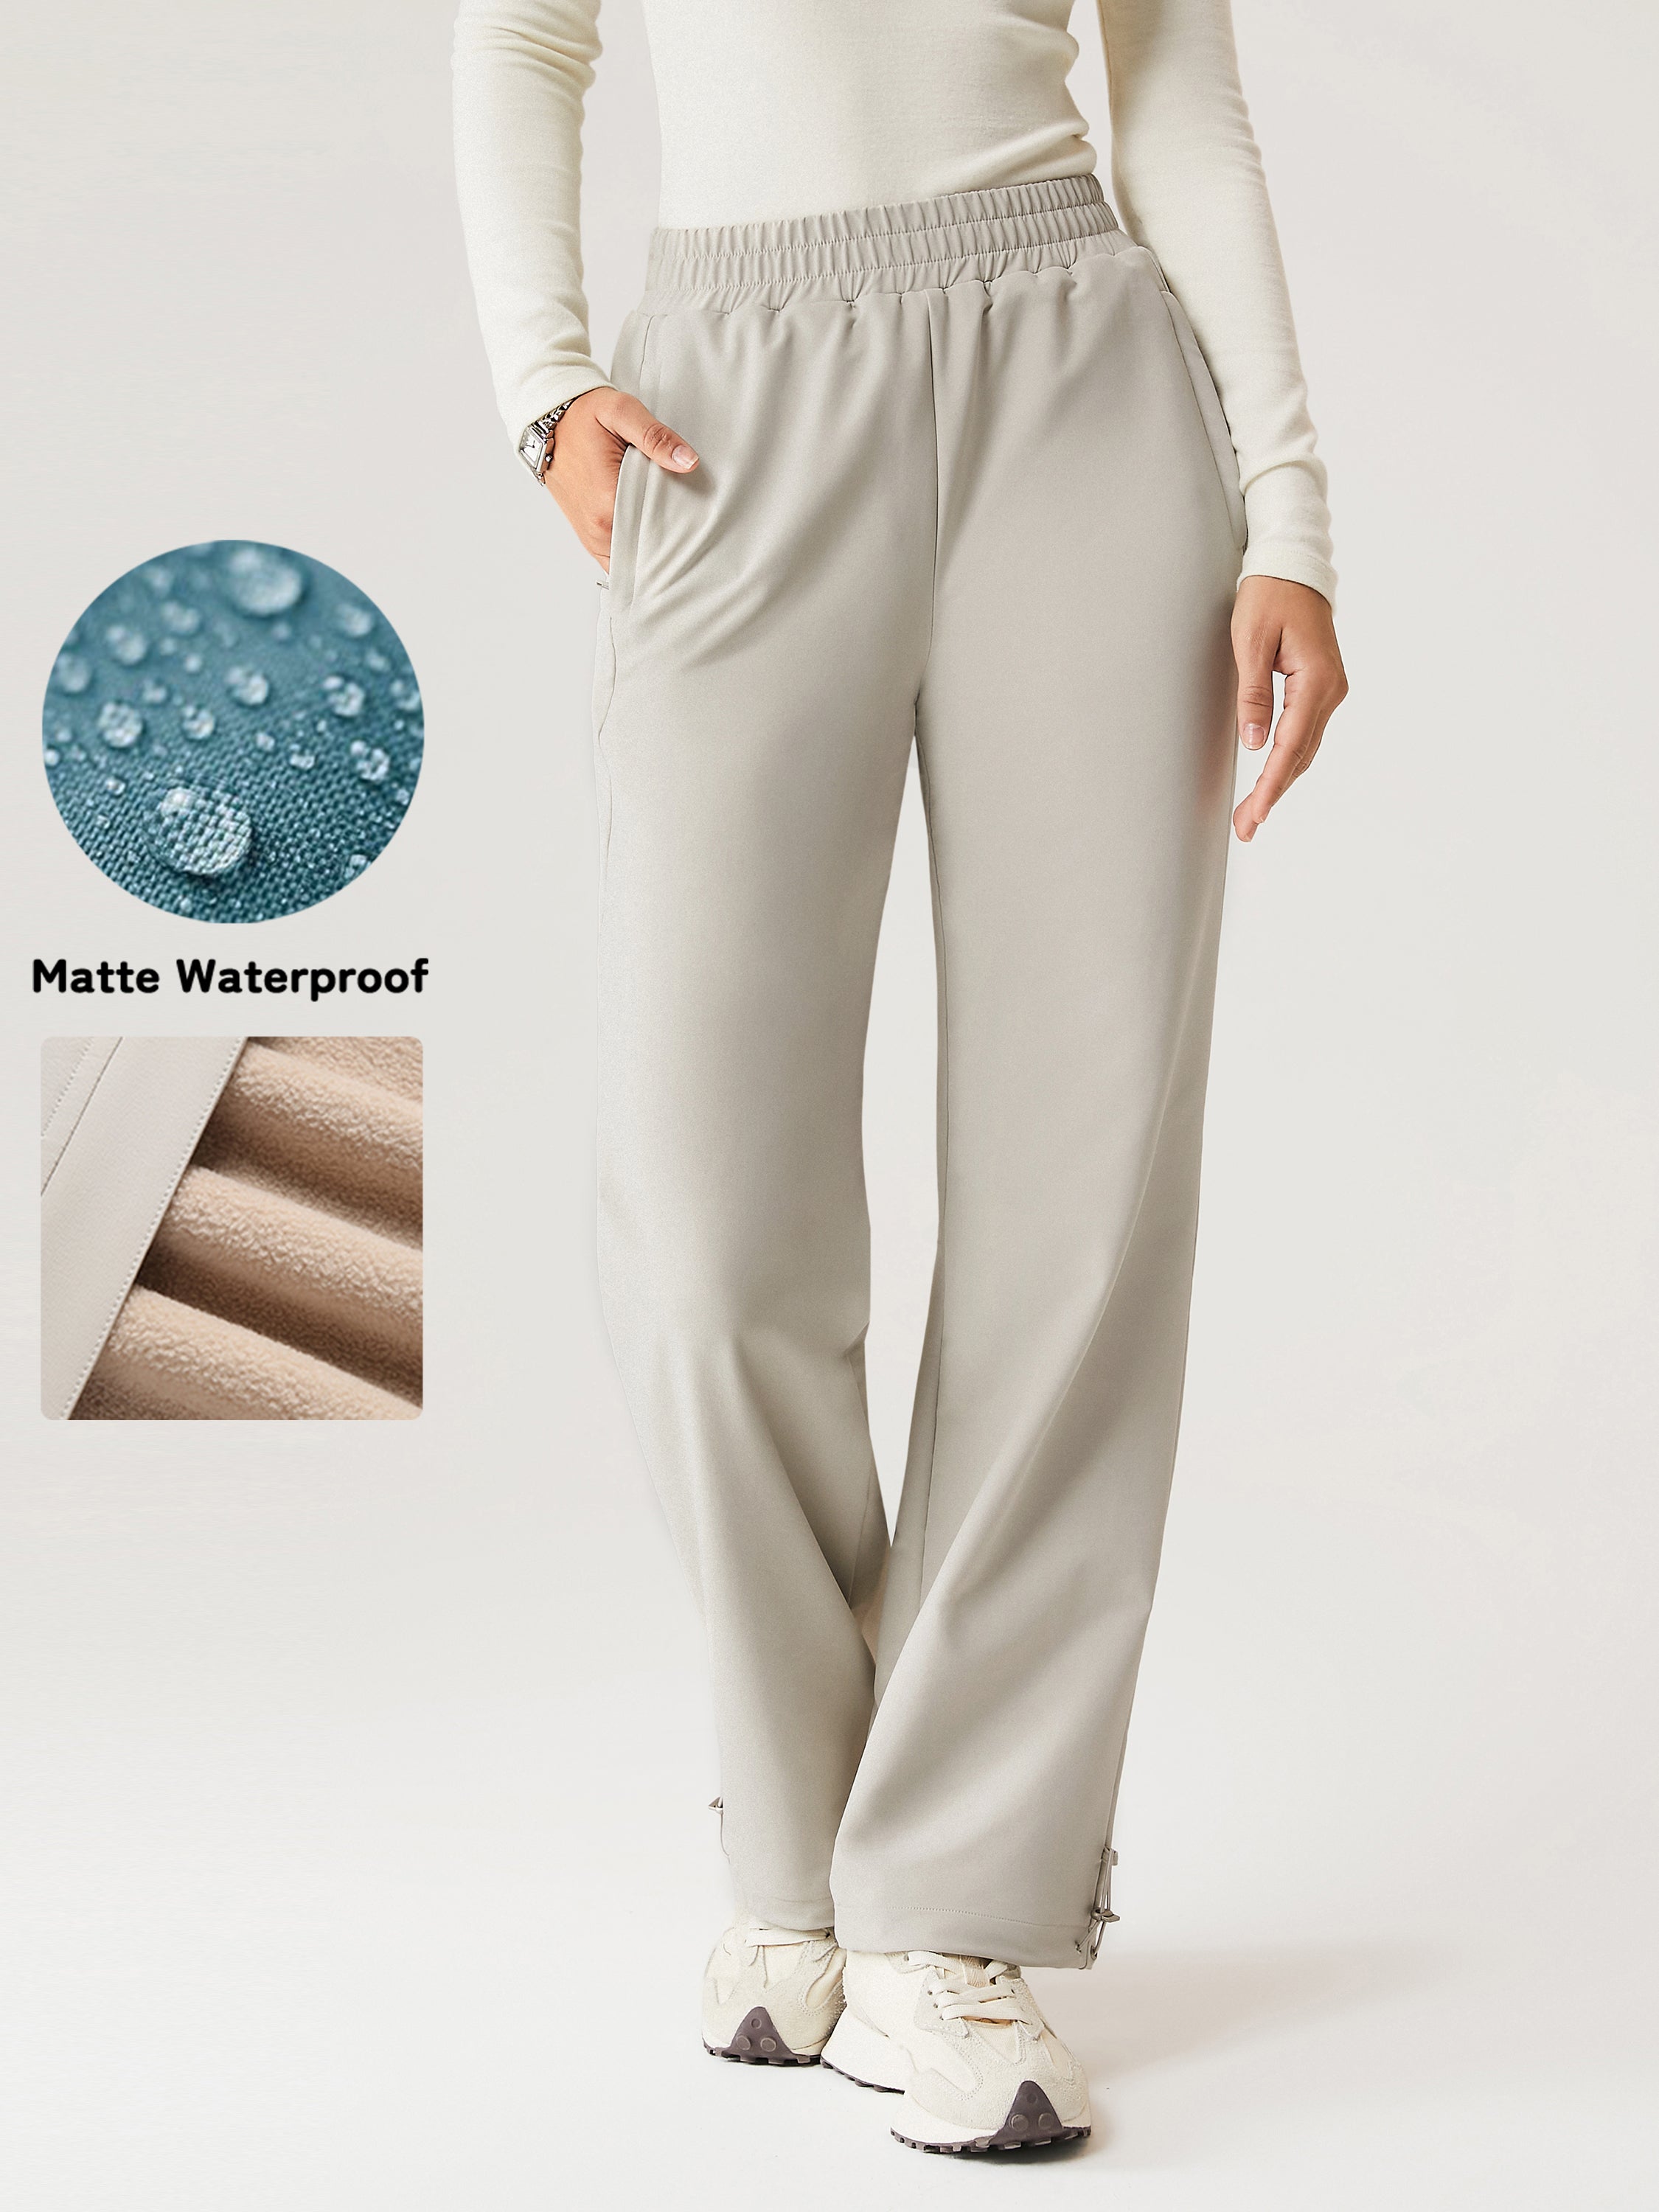 Basic Editions Women's Knit Pants